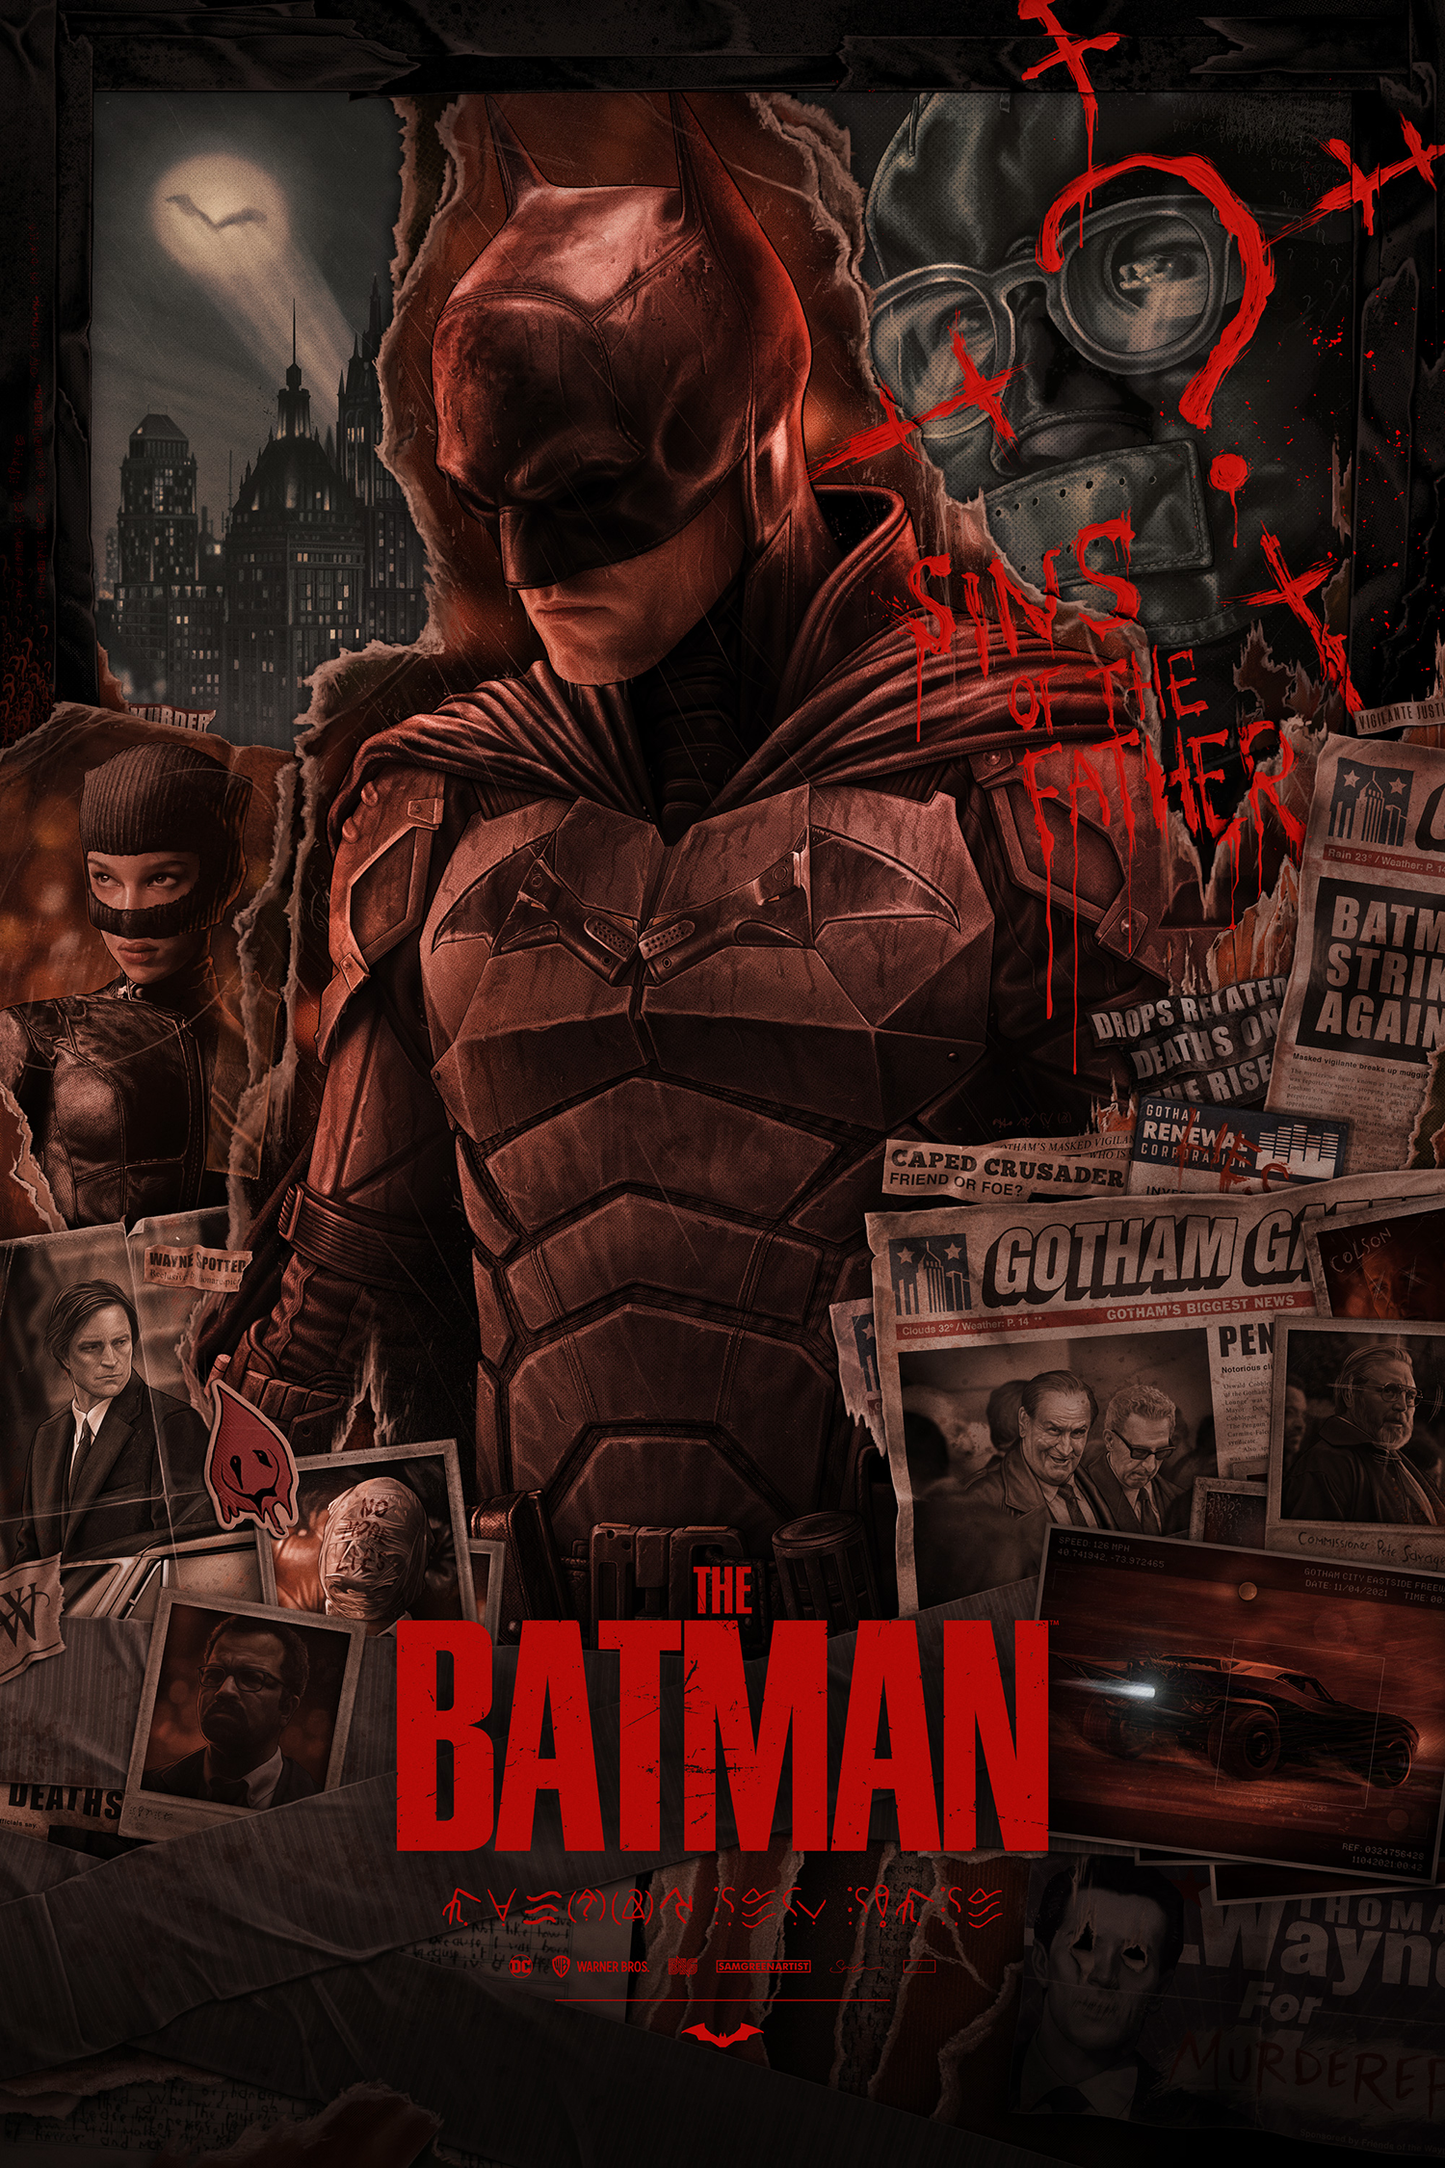 Sam Green "The Batman" Variant